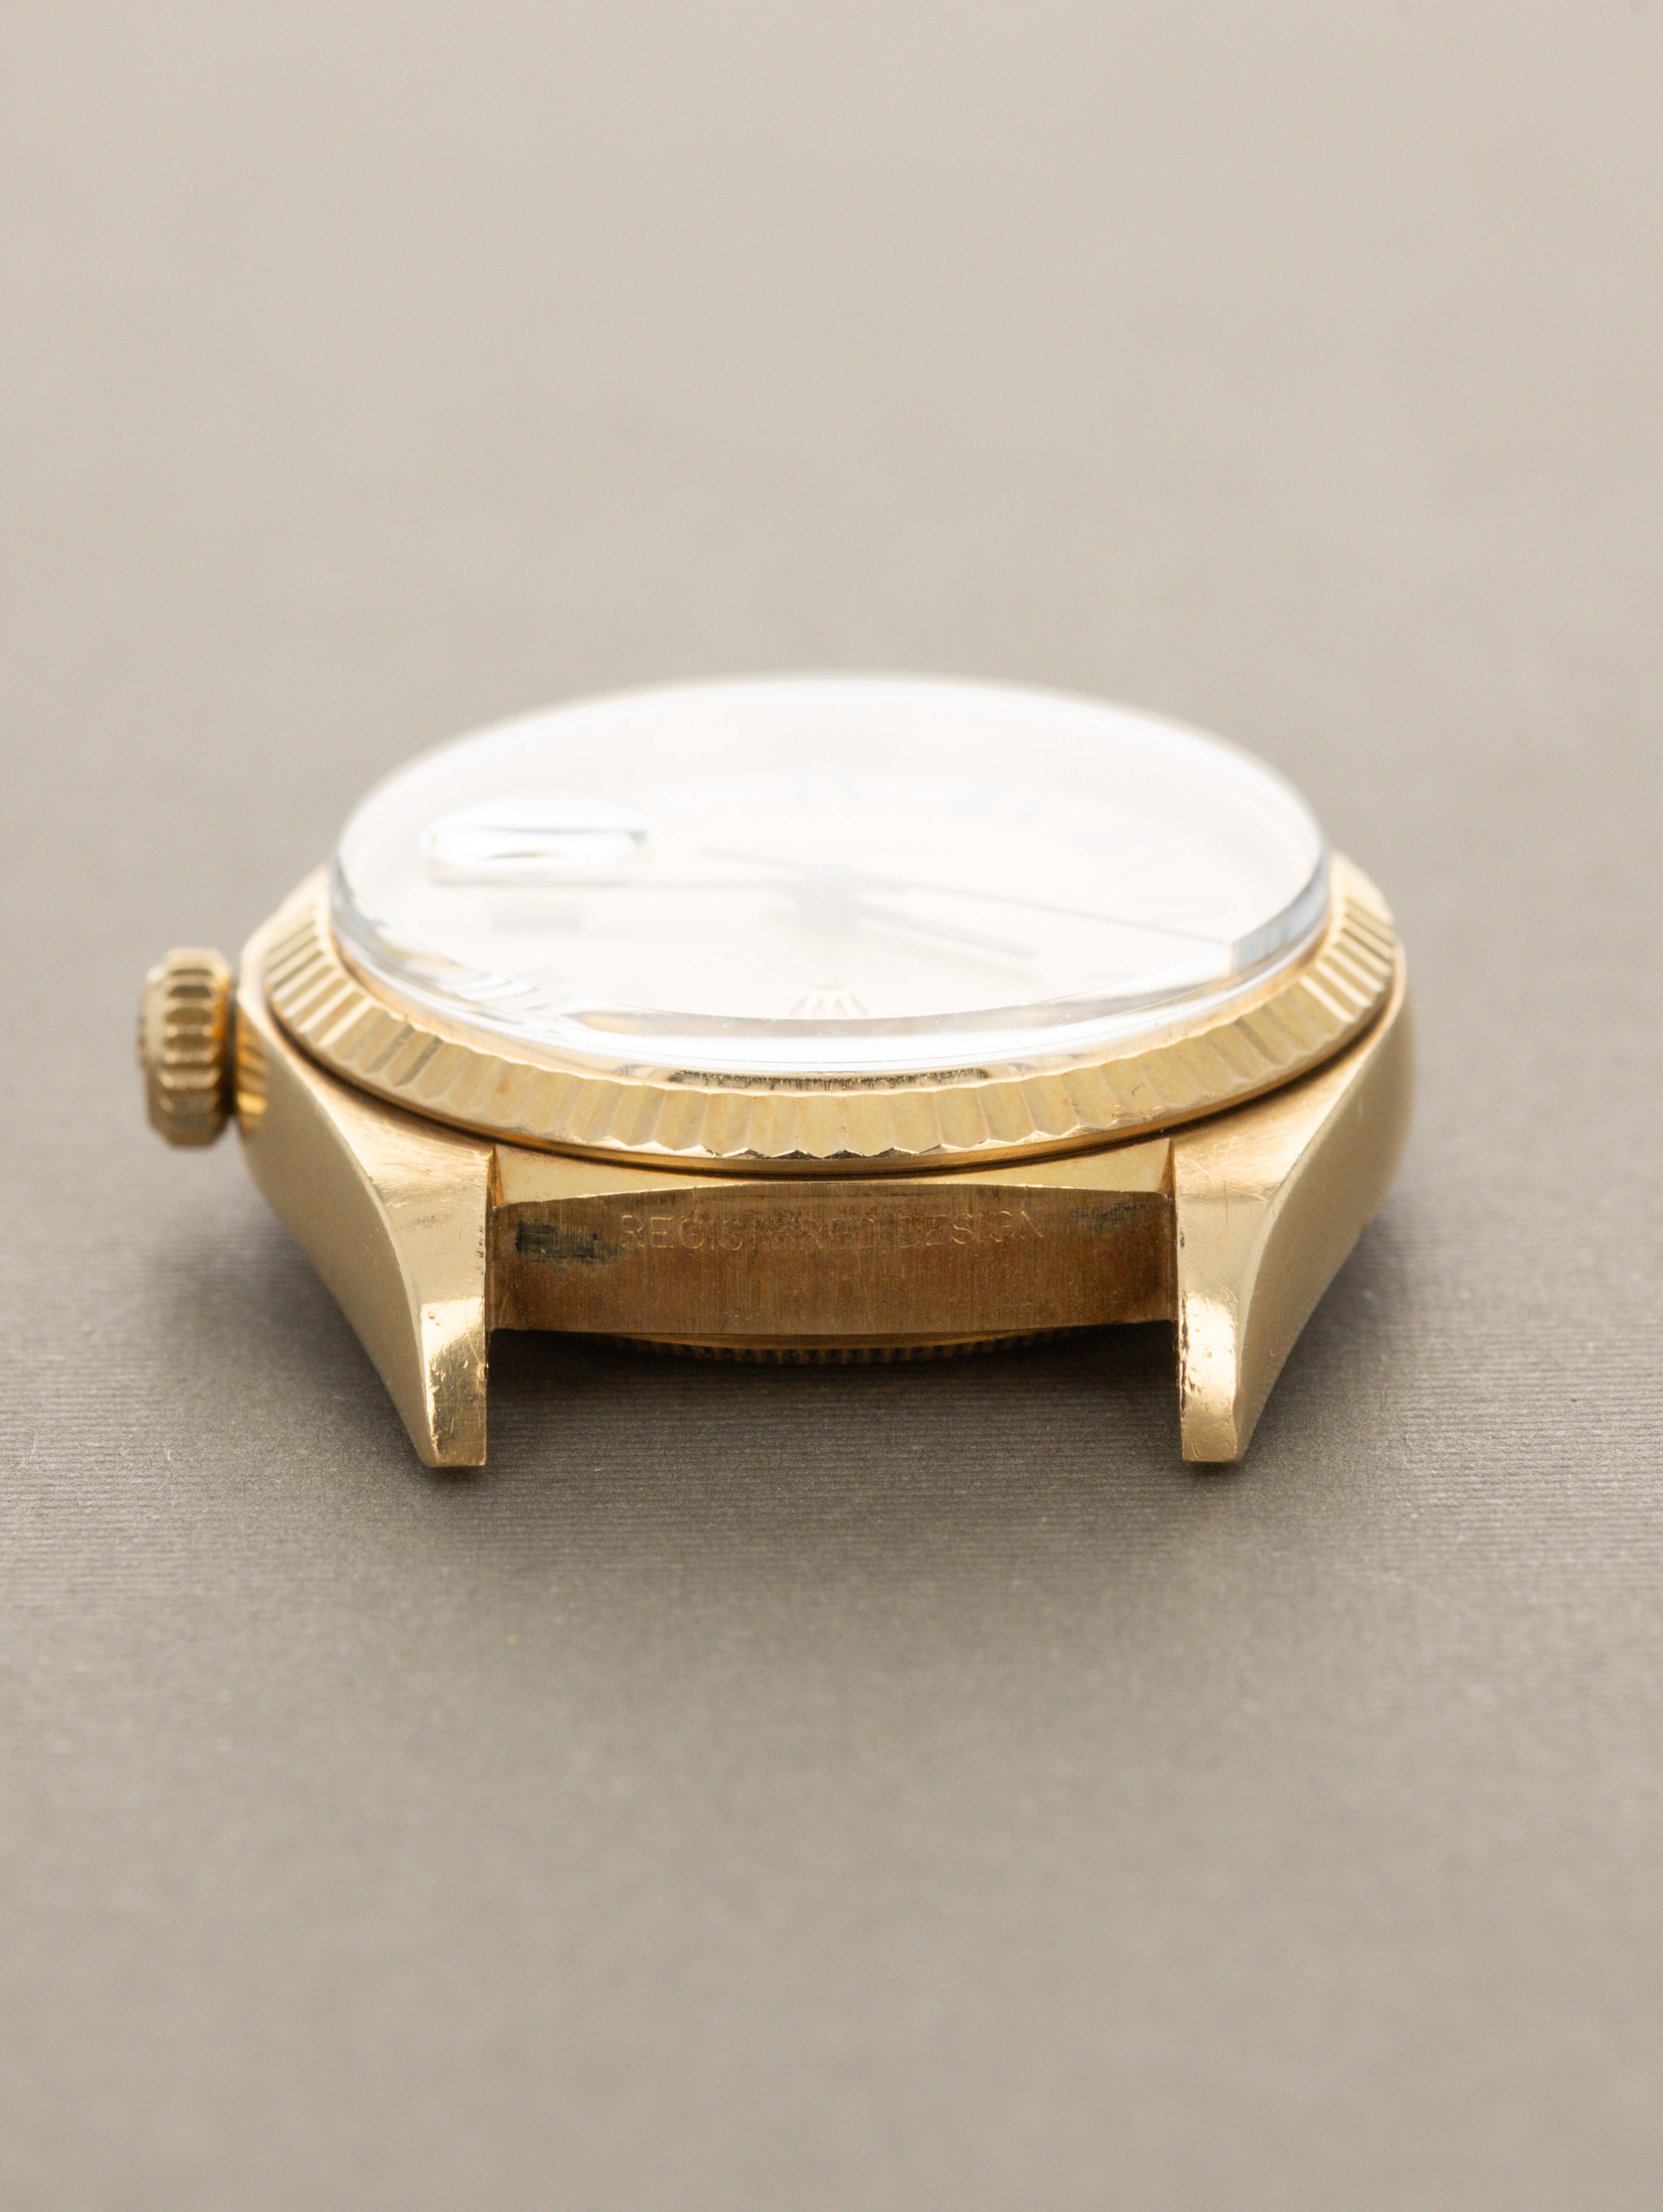 Rolex Day-Date Ref. 1803 - 'Buckley' Dial